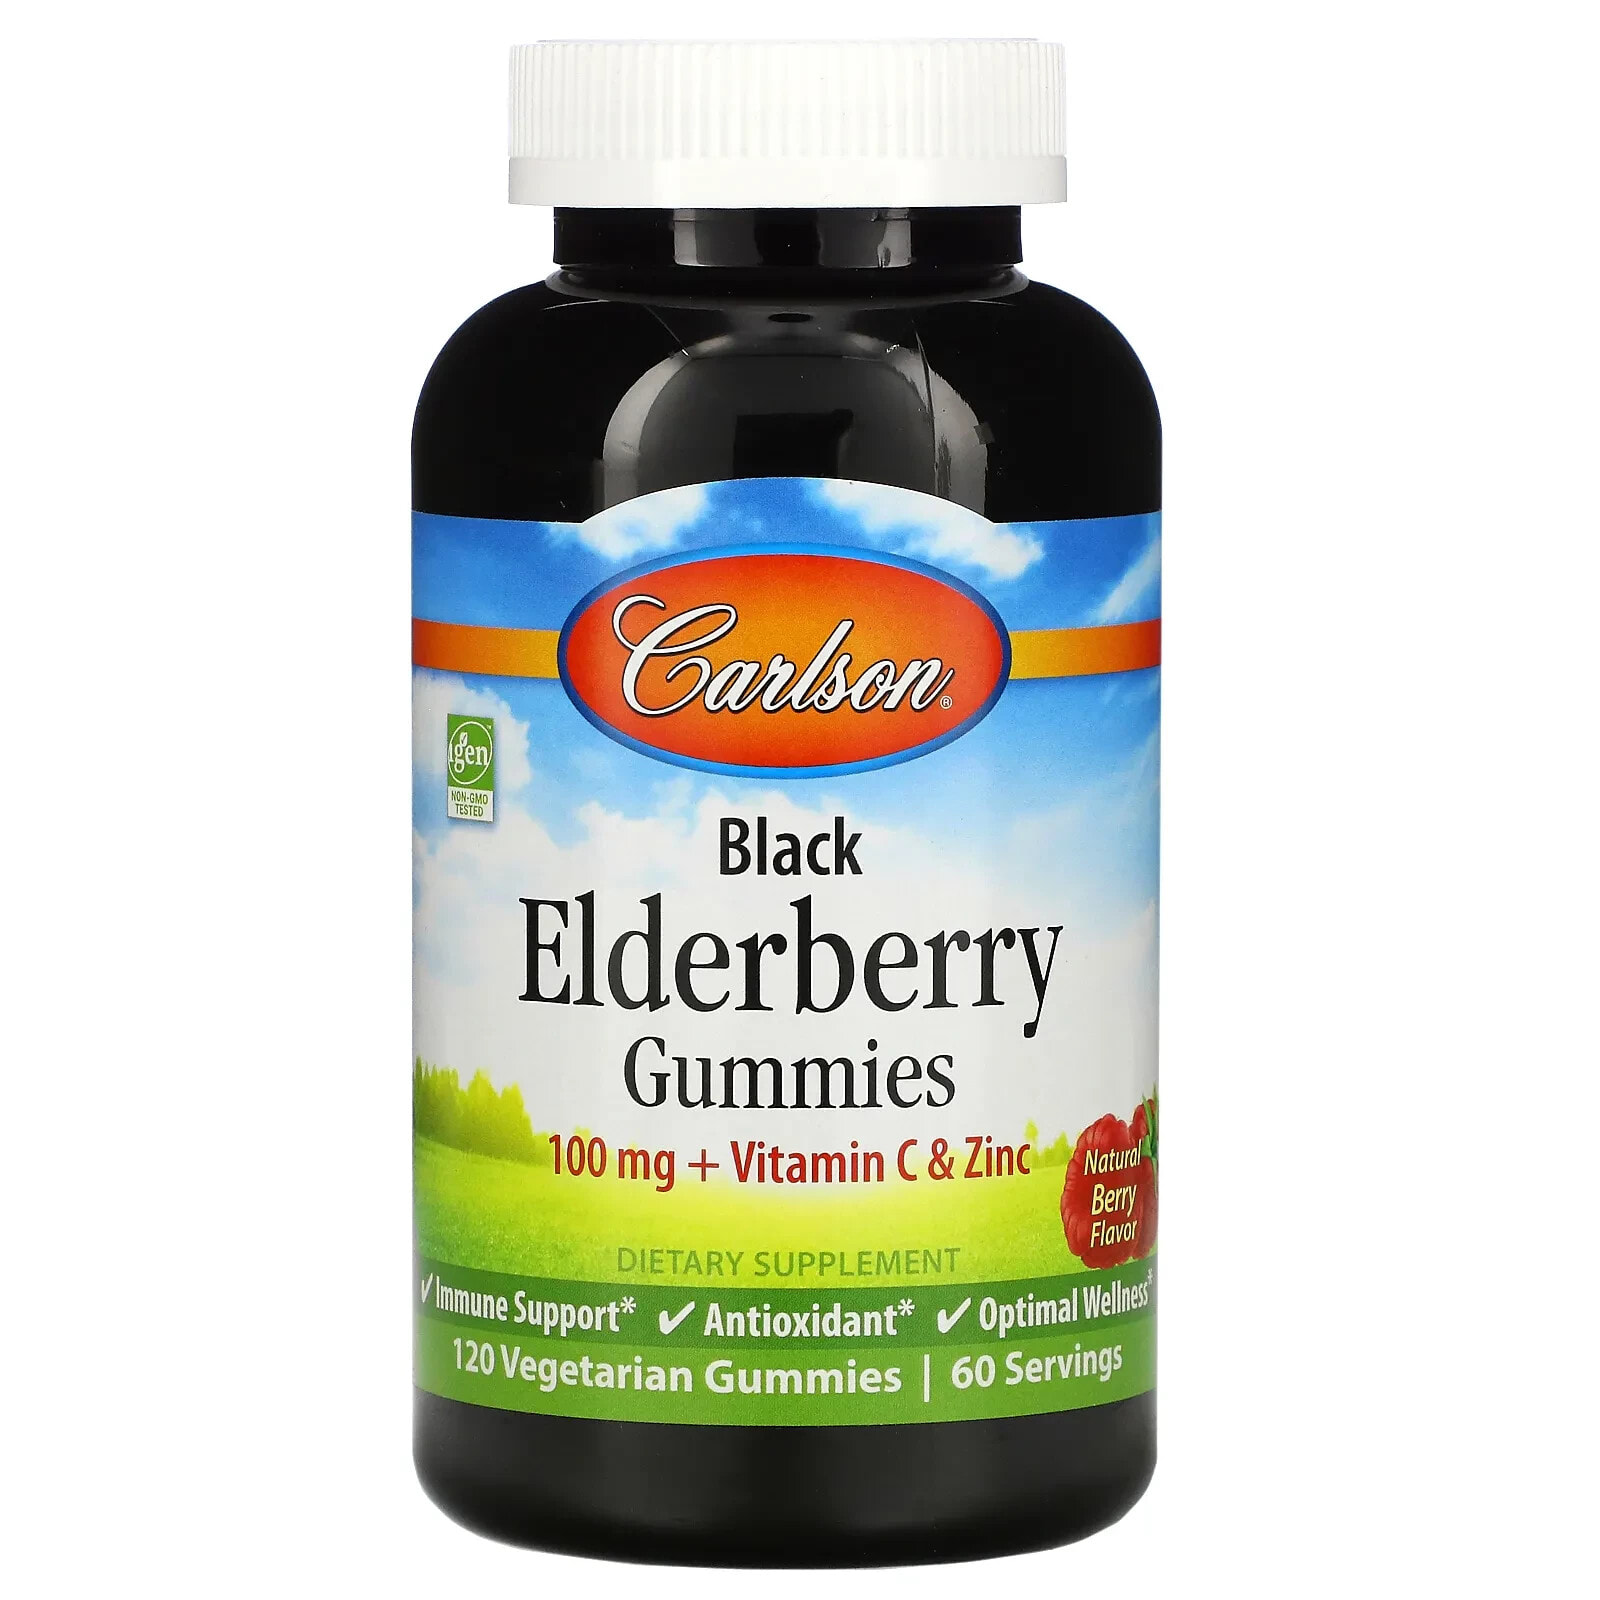 Black Elderberry Gummies + Vitamin C & Zinc, Natural Berry, 100 mg, 120 Vegetarian Gummies (50 mg per Gummy)